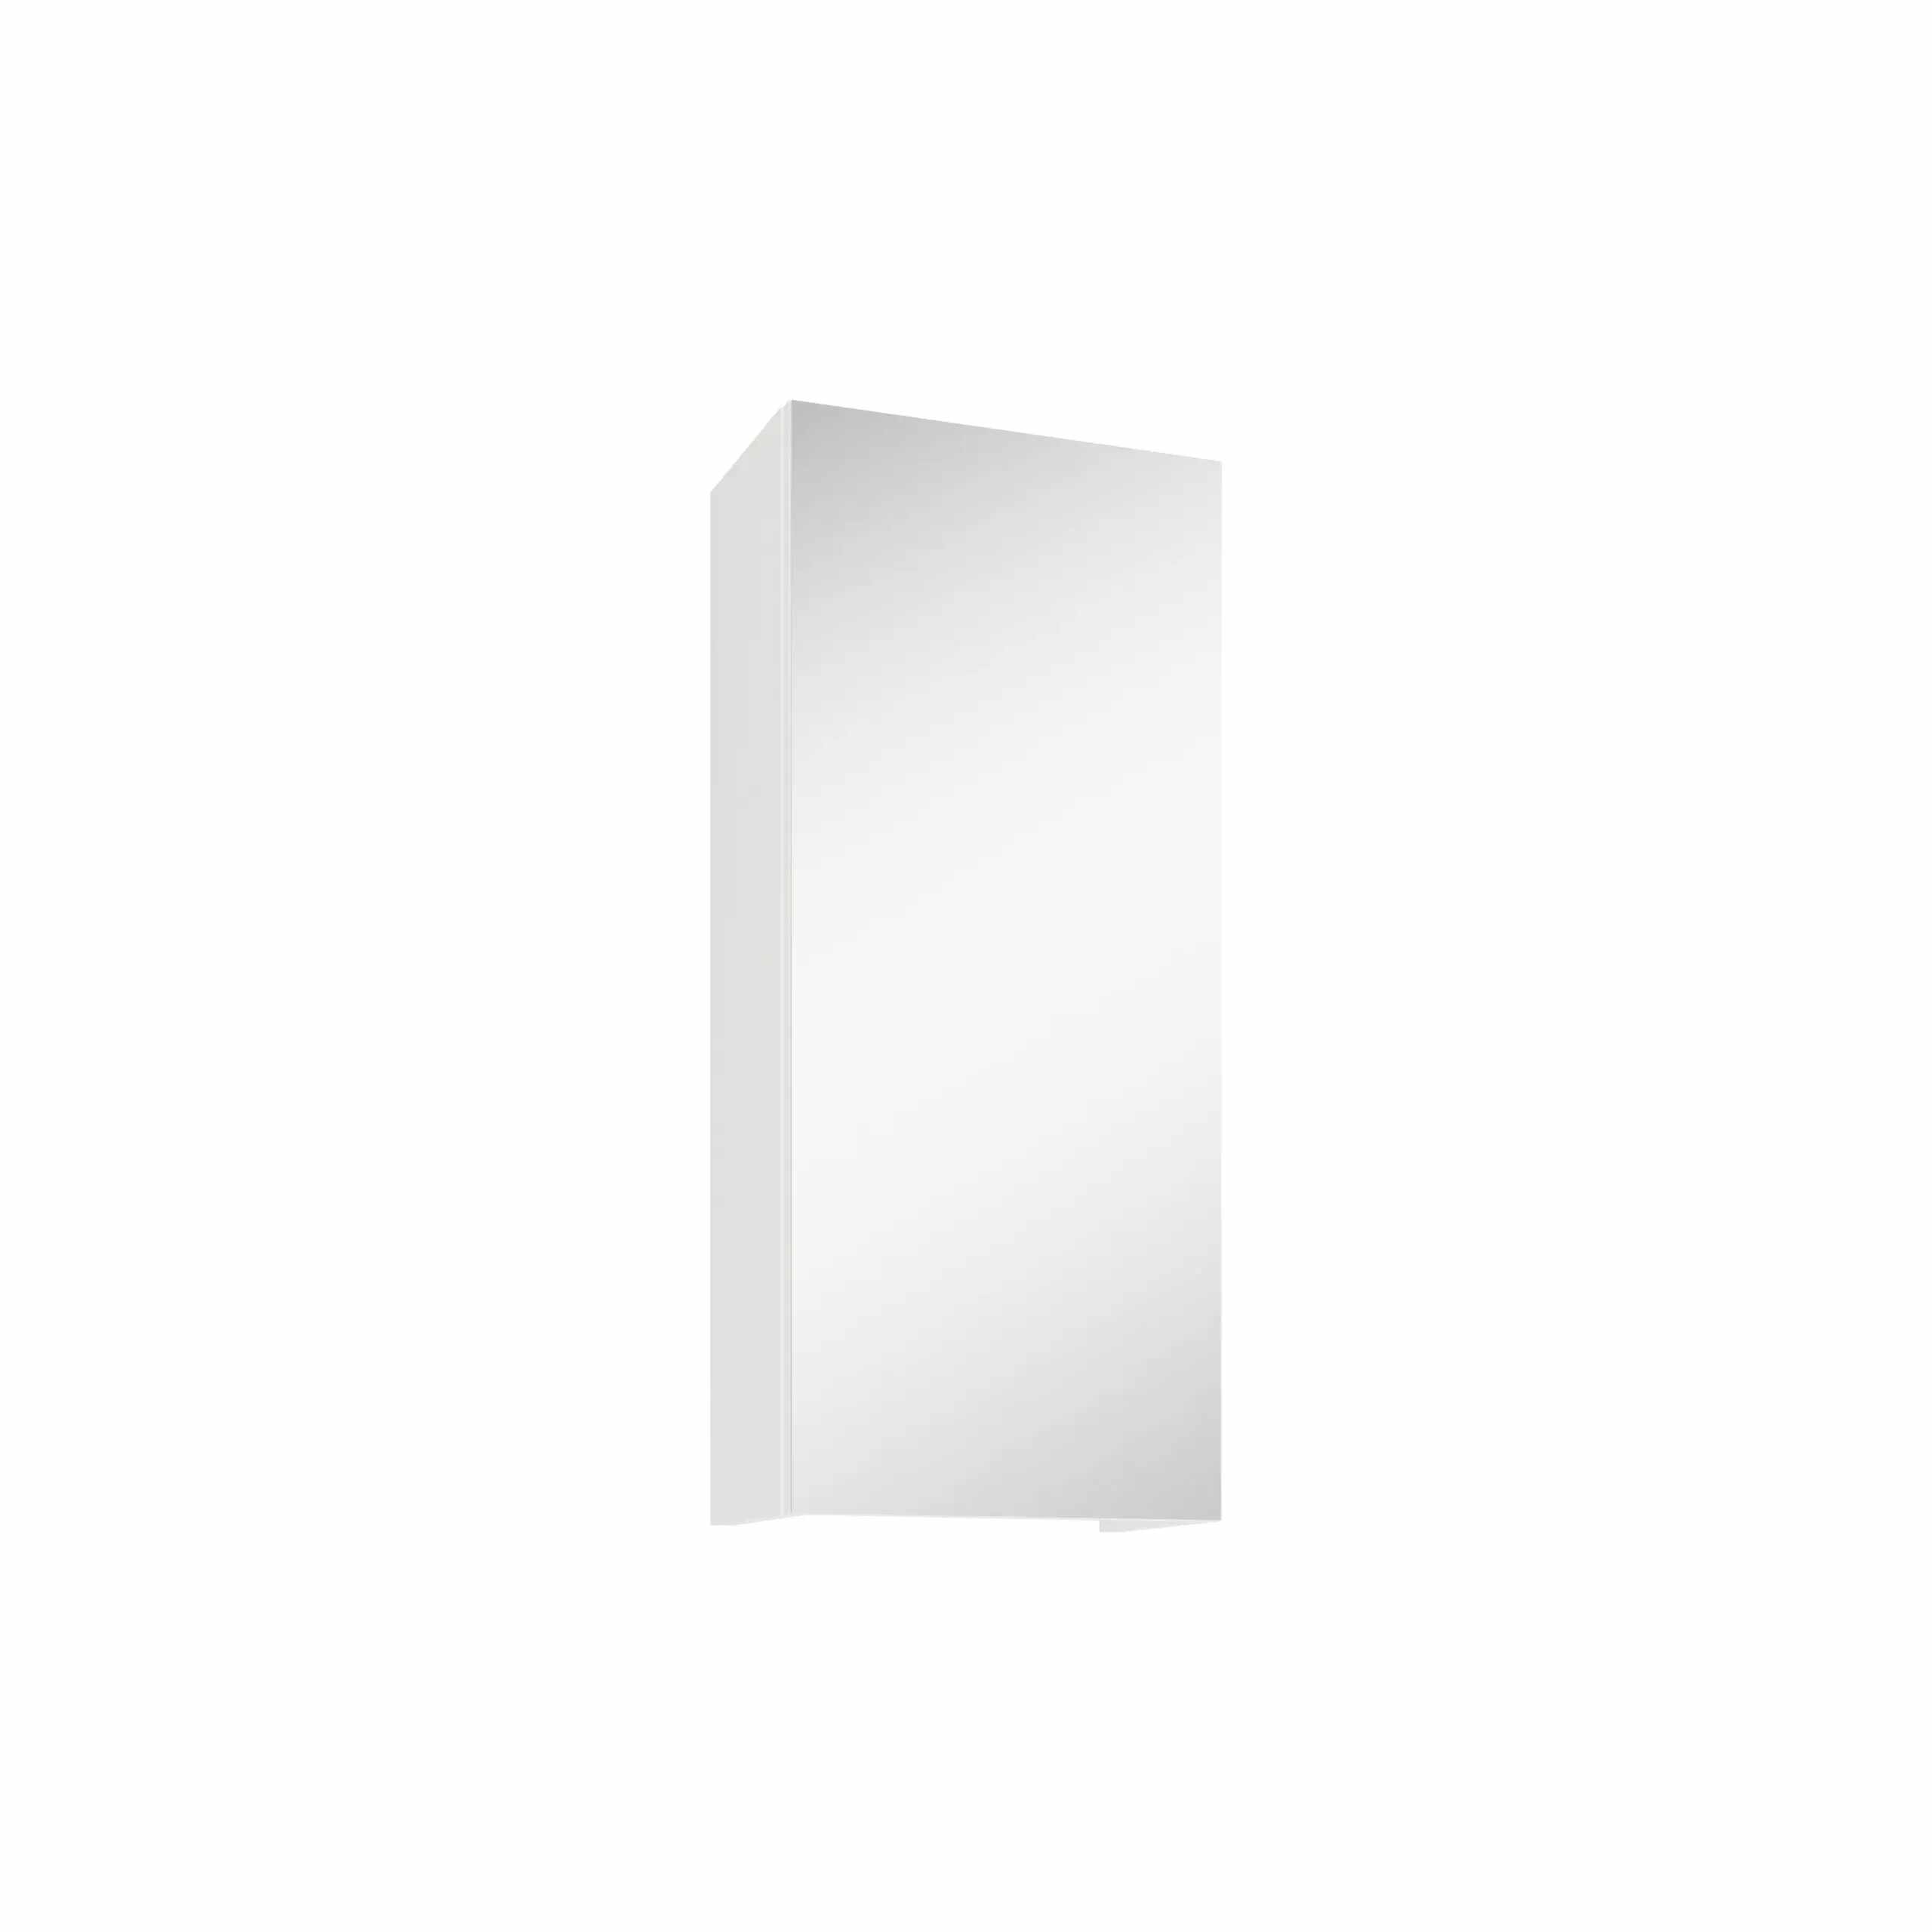 Corp Baie Zed, Suspendat, 1 Usa, cu oglinda, Alb, 30 x 22 x 72 cm